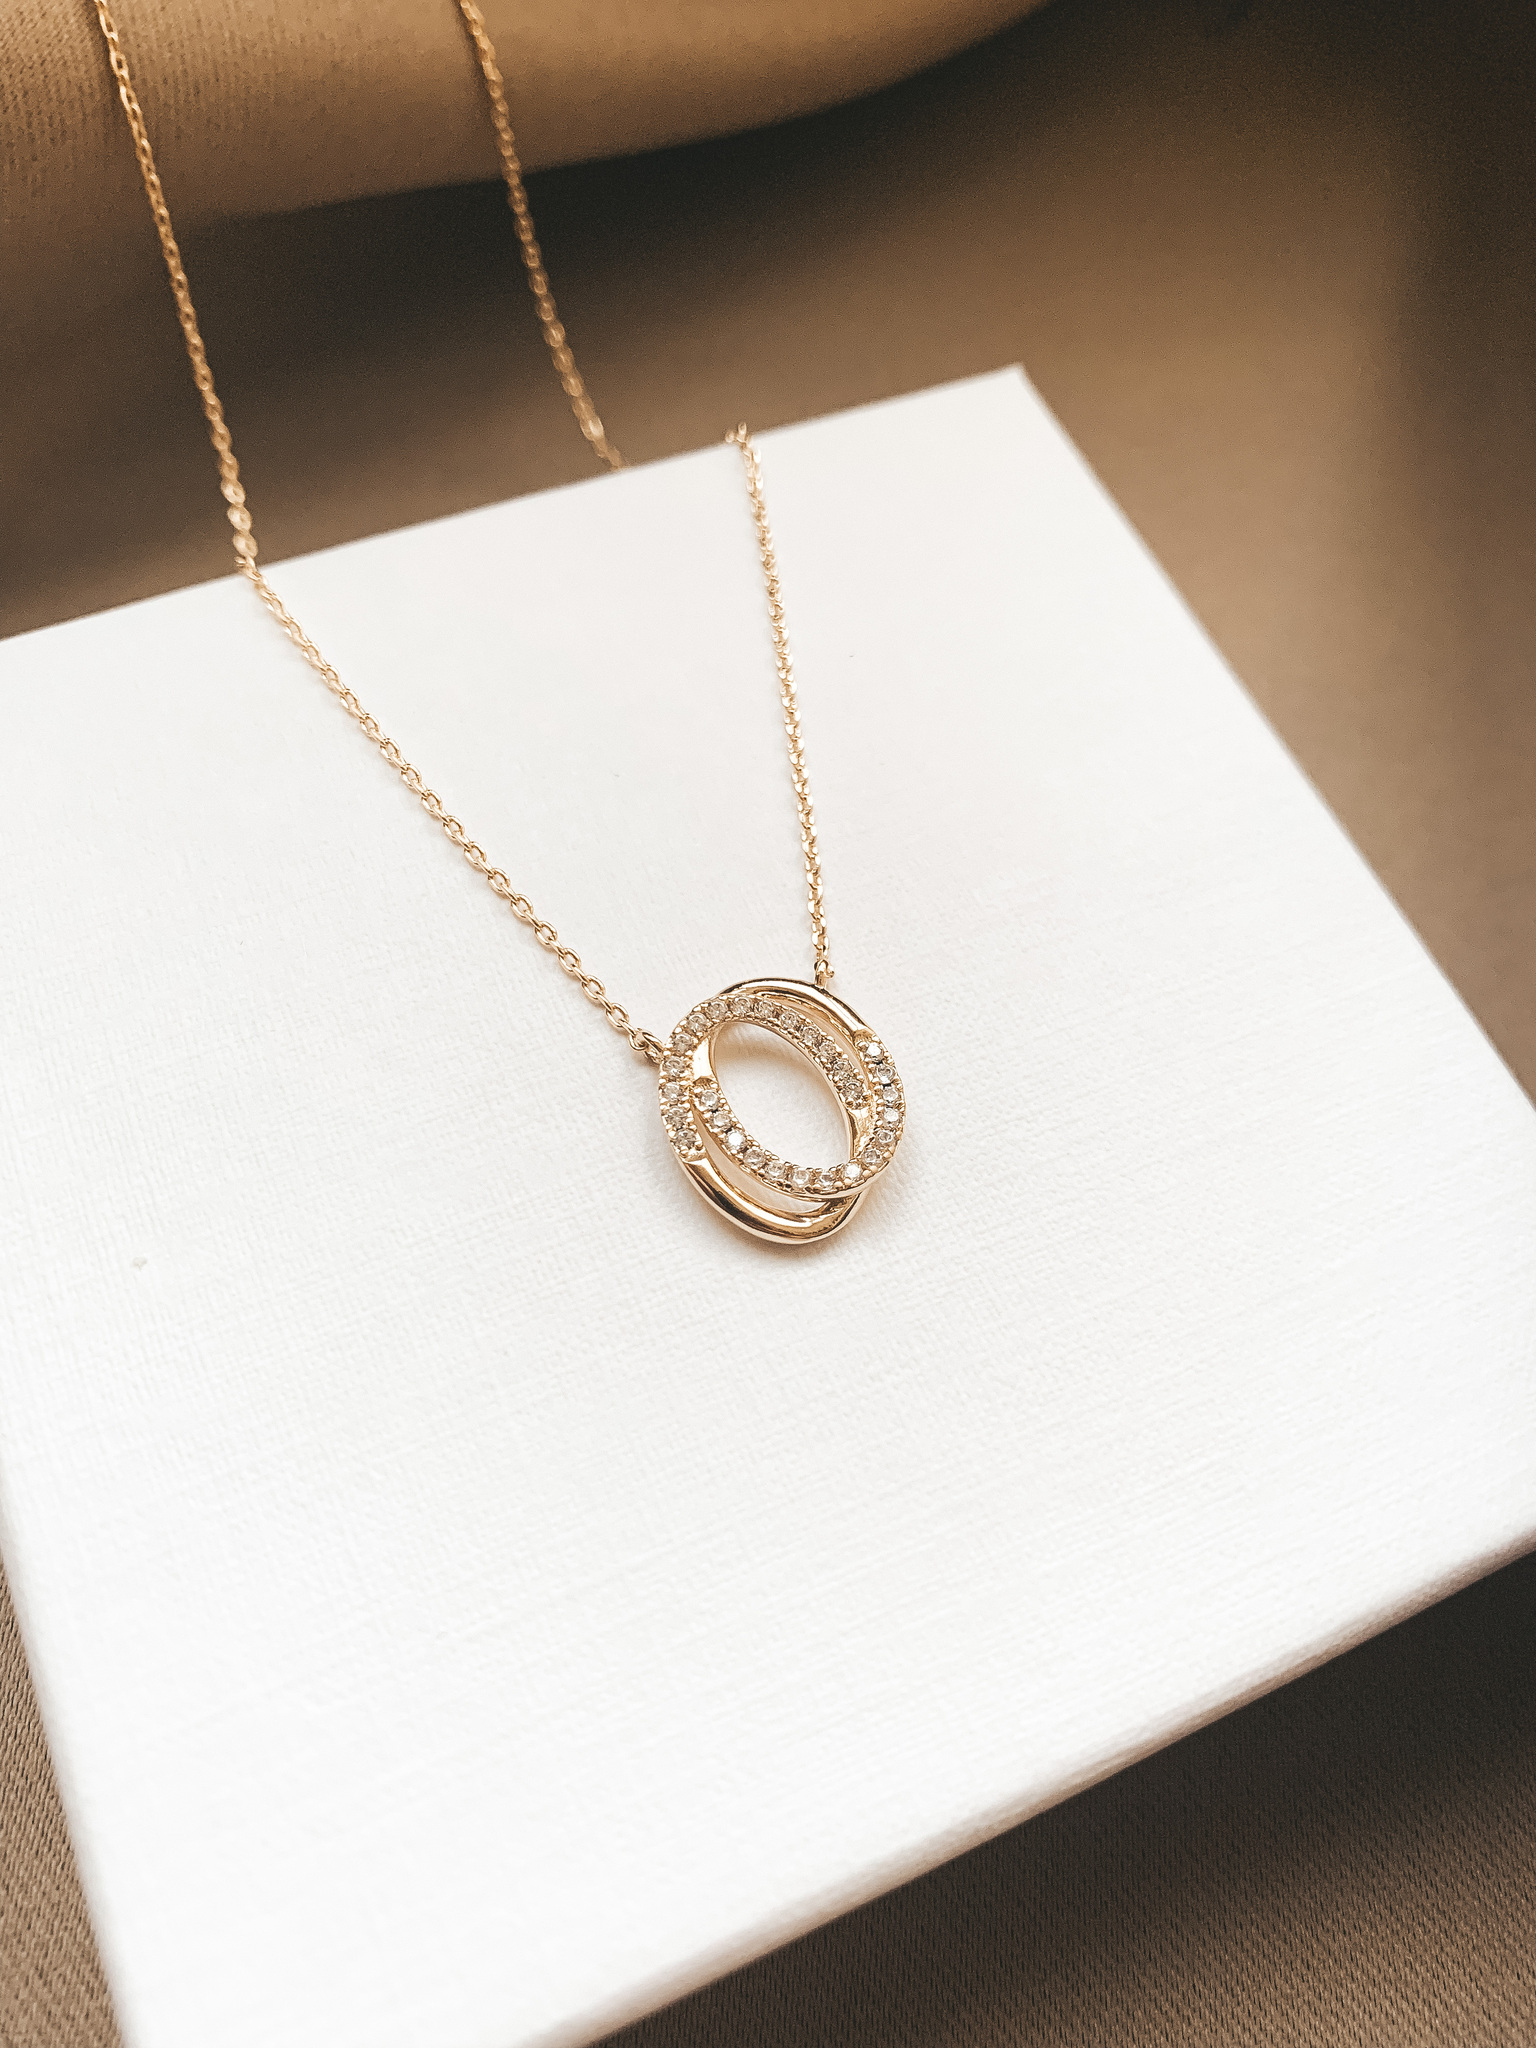 Circle of Paris Necklace Gold